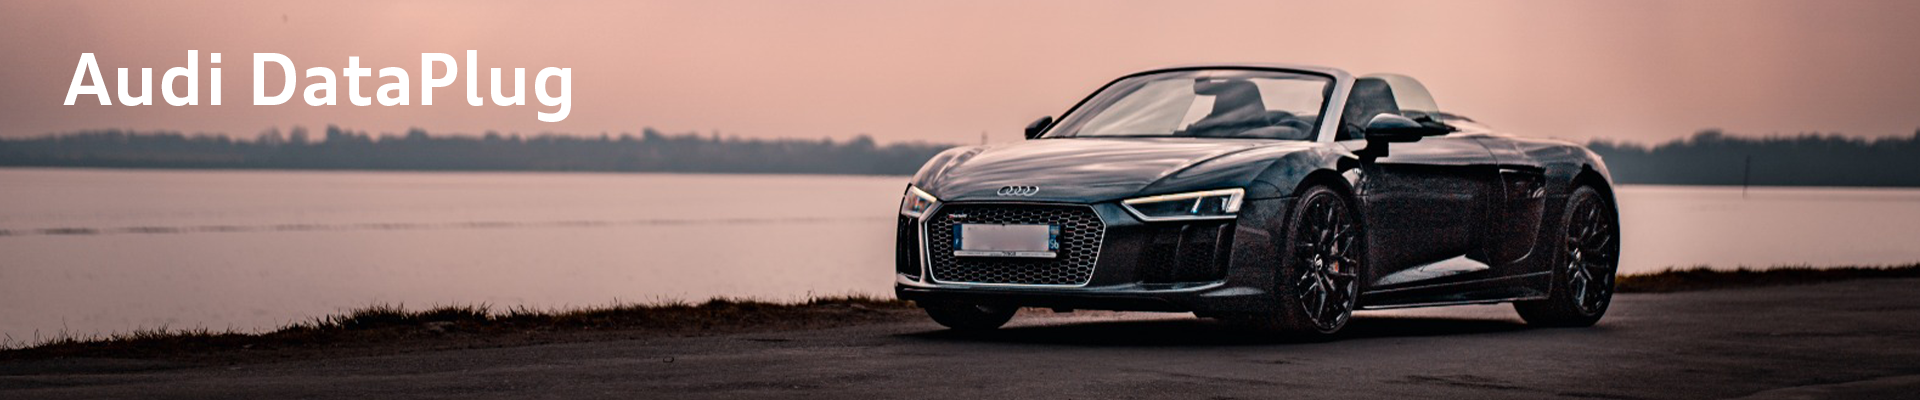 Audi r8 v10 performance